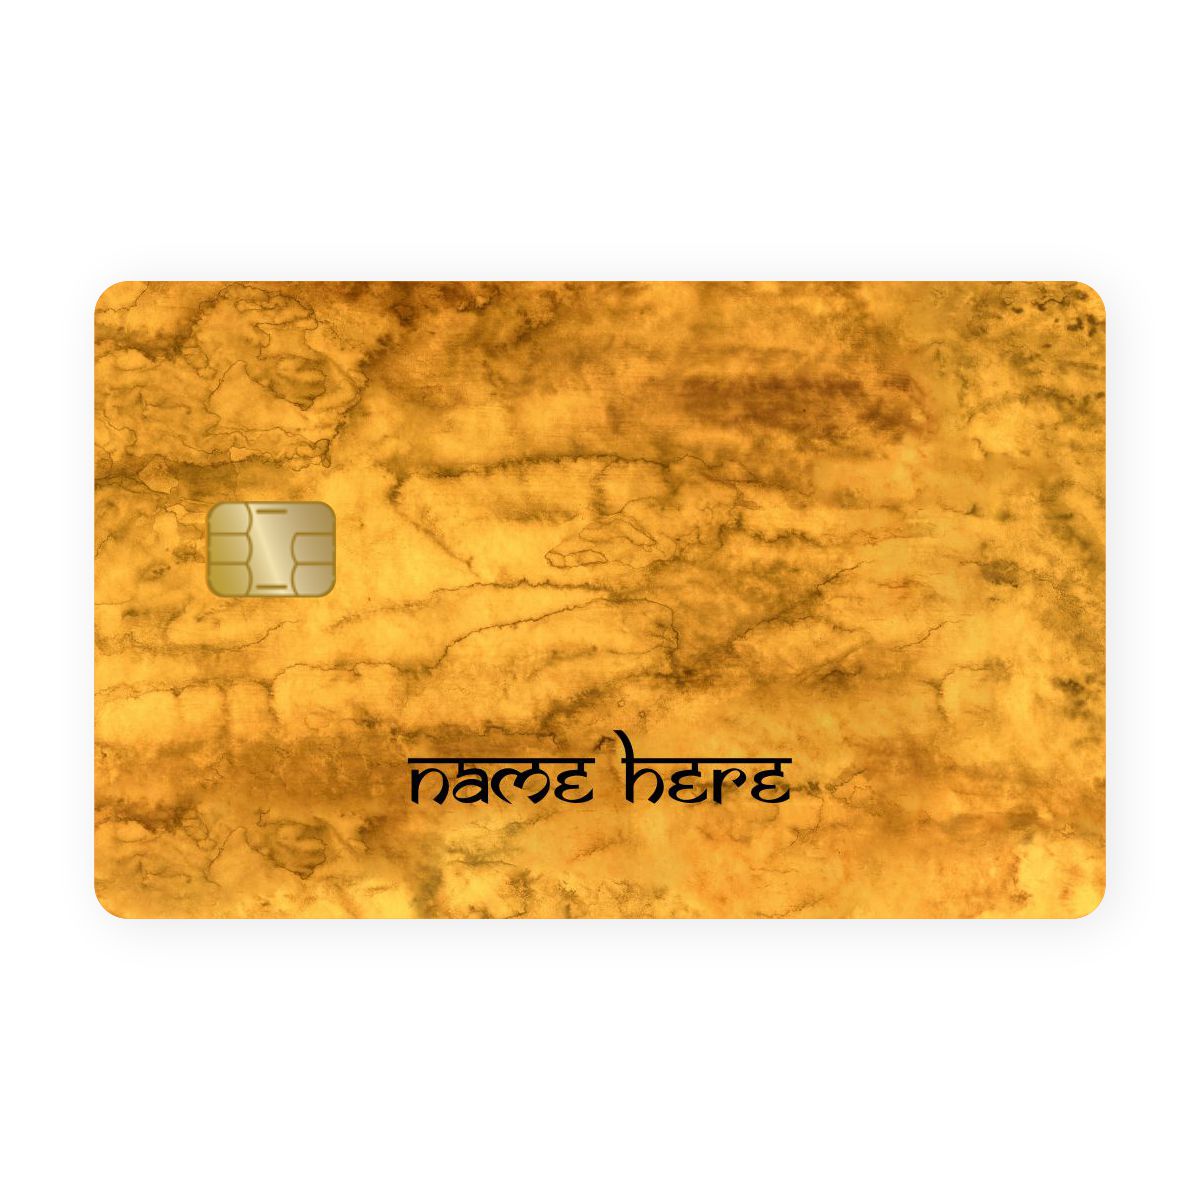 credit card skin template